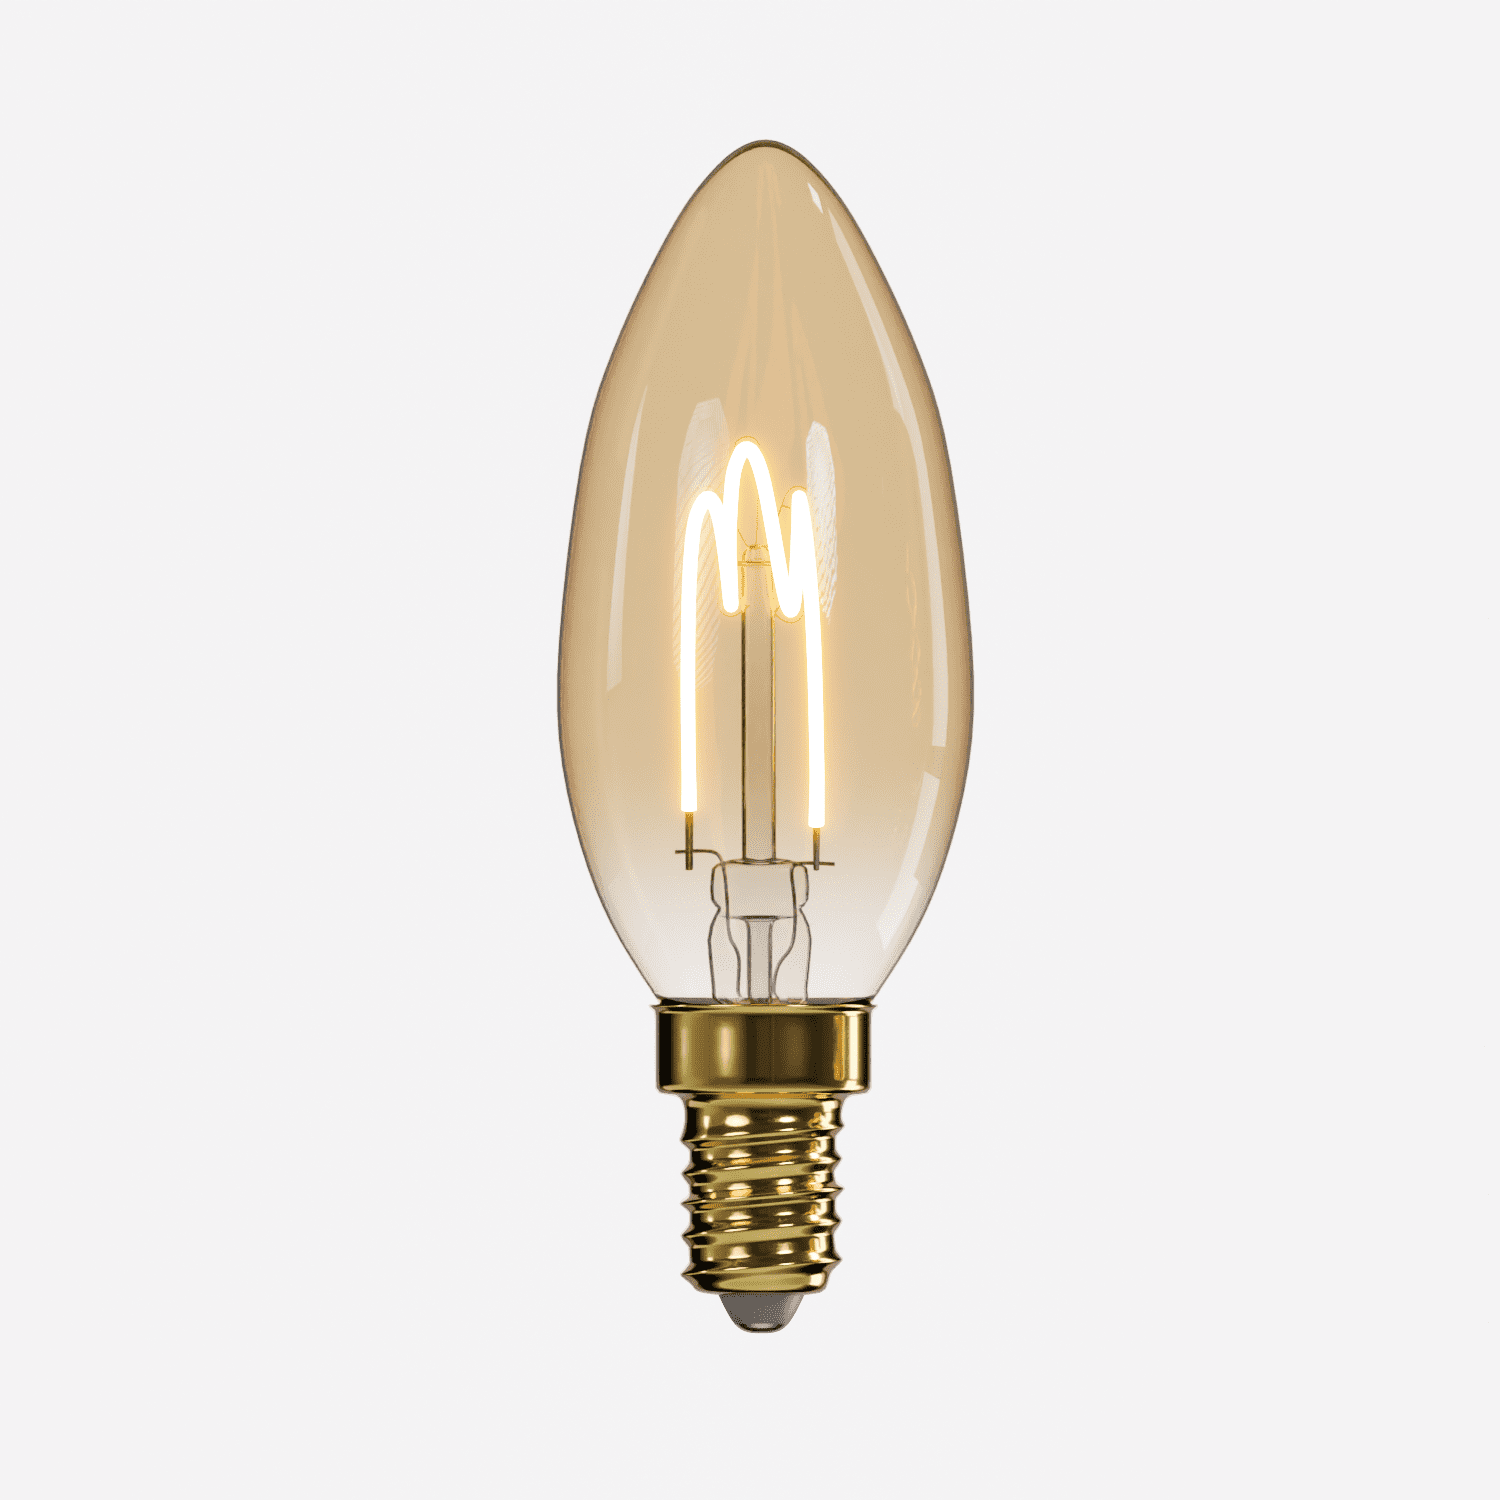 LED loop filament light bulb, candle shape, vintage look, E14, 2.5 W, 220 V, 3.5x9.5